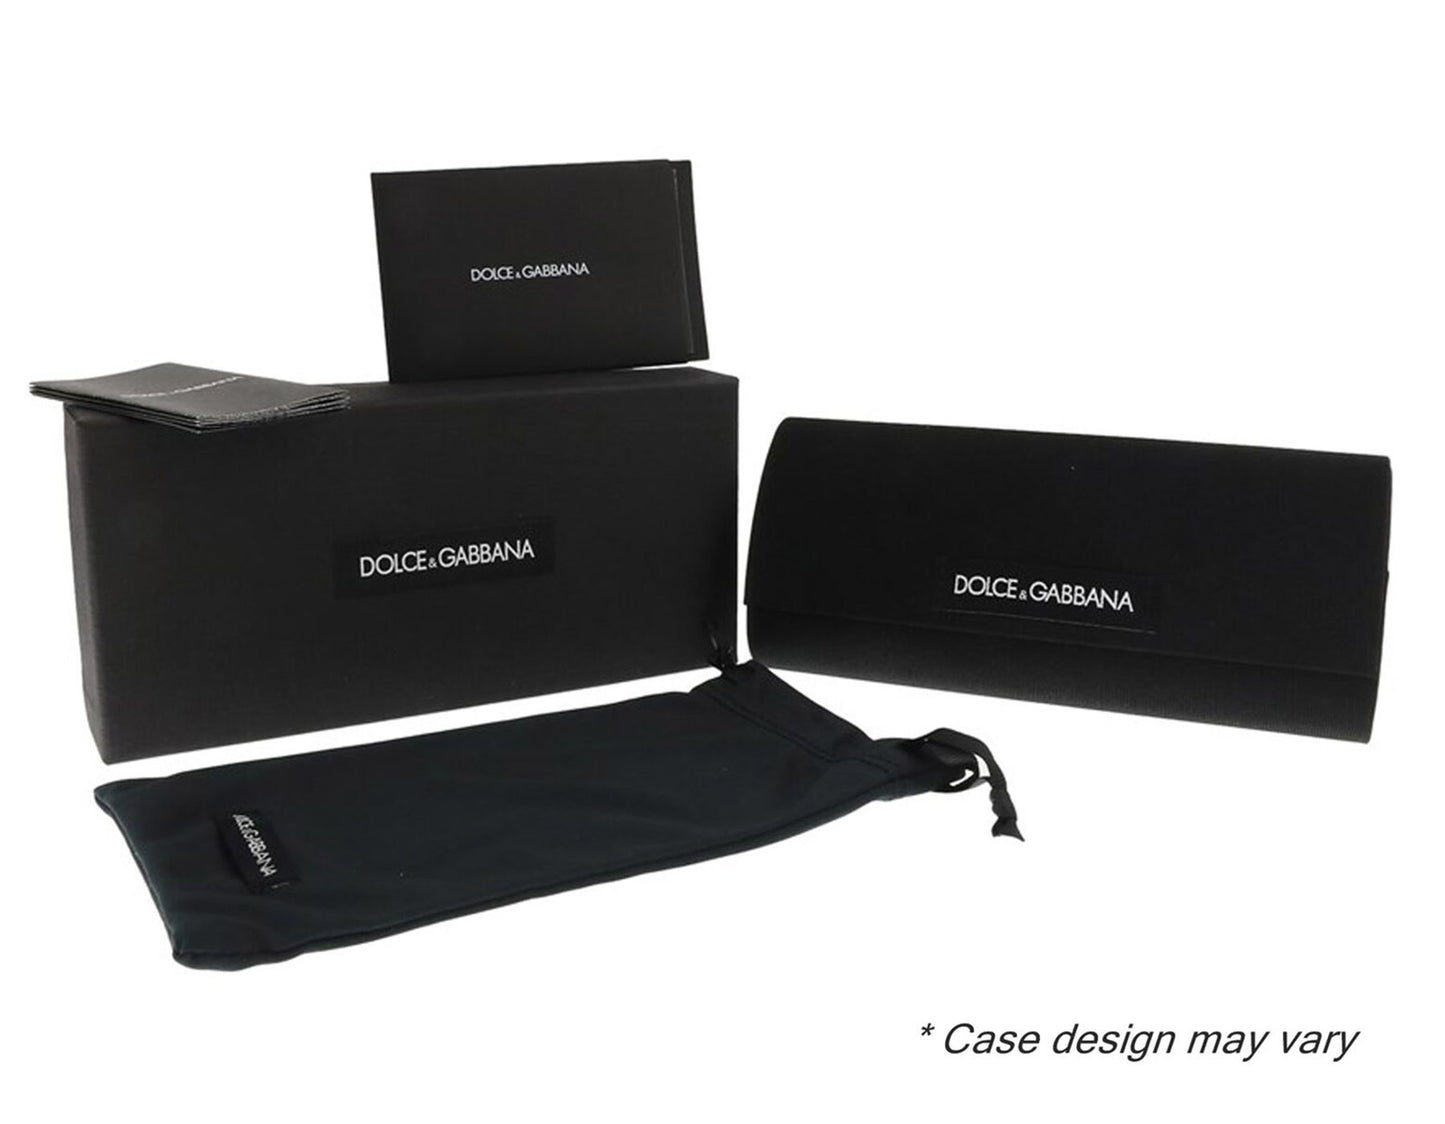 Dolce & Gabbana 0DG2293-05/87 56mm New Sunglasses